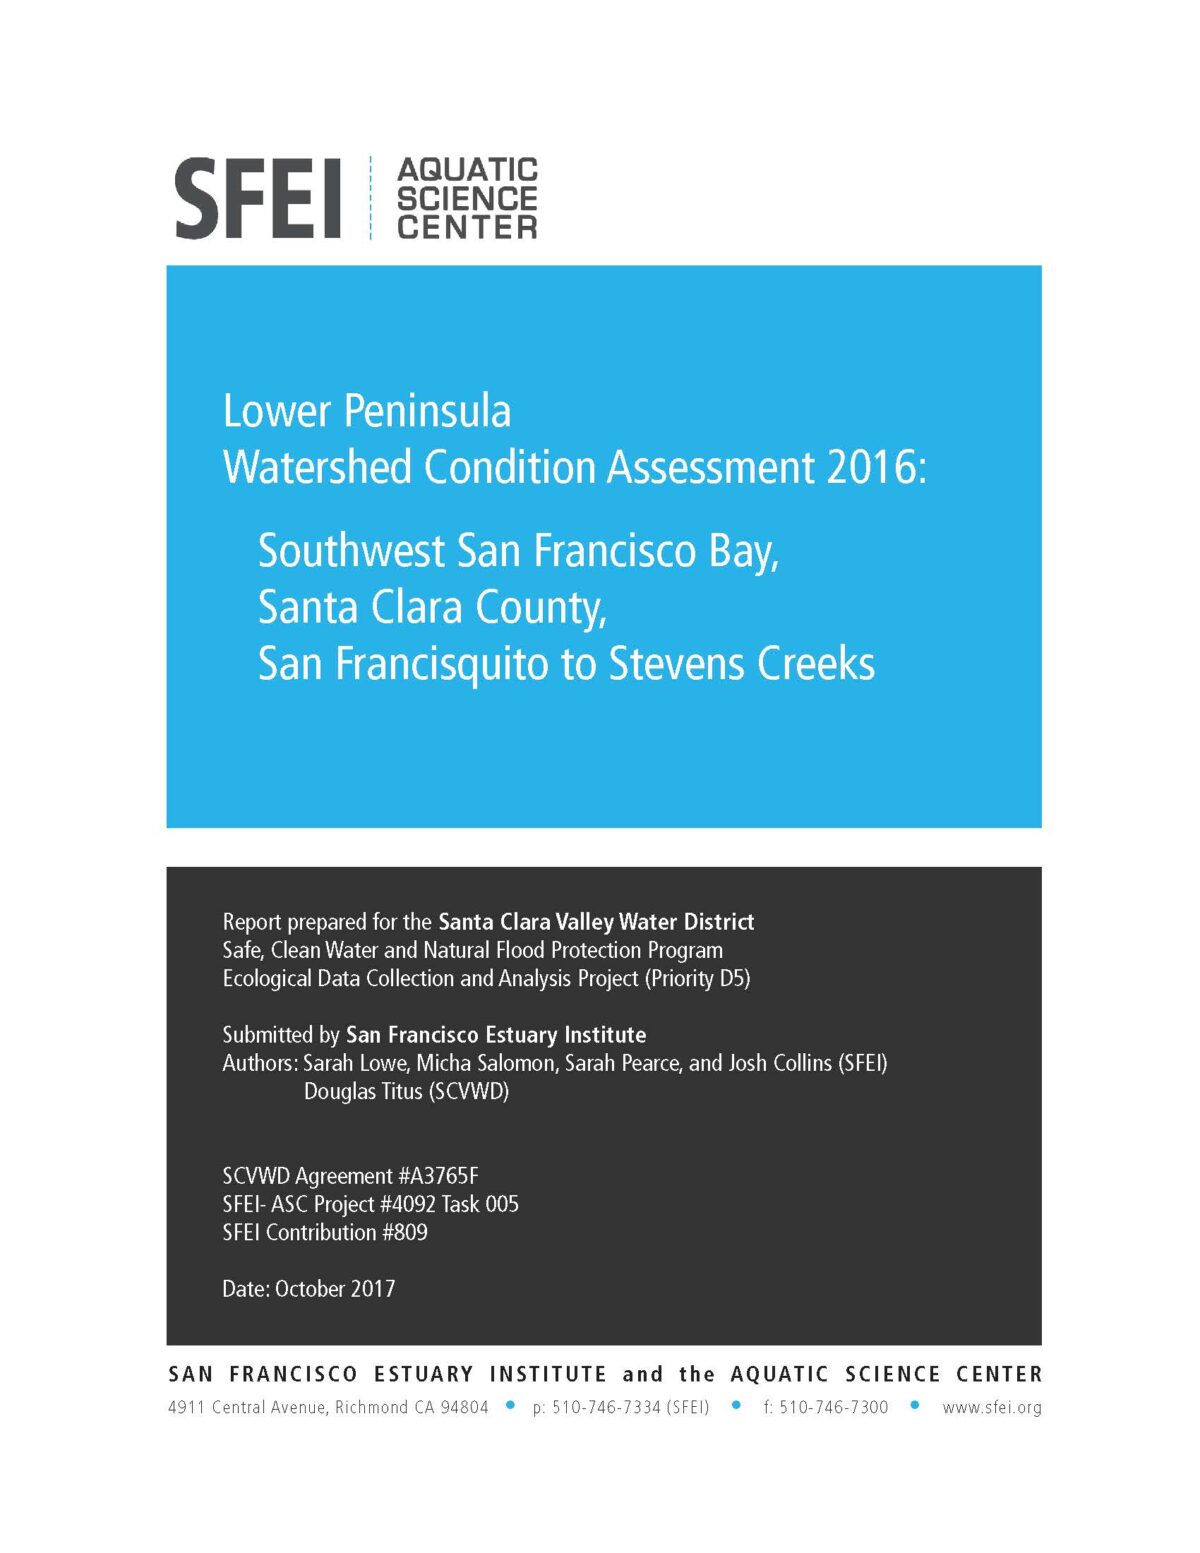 Lower Peninsula Watershed Condition Assessment 2016: Southwest San Francisco Bay, Santa Clara County, San Francisquito to Stevens Creeks. Technical memorandum prepared for the Santa Clara Valley Water District